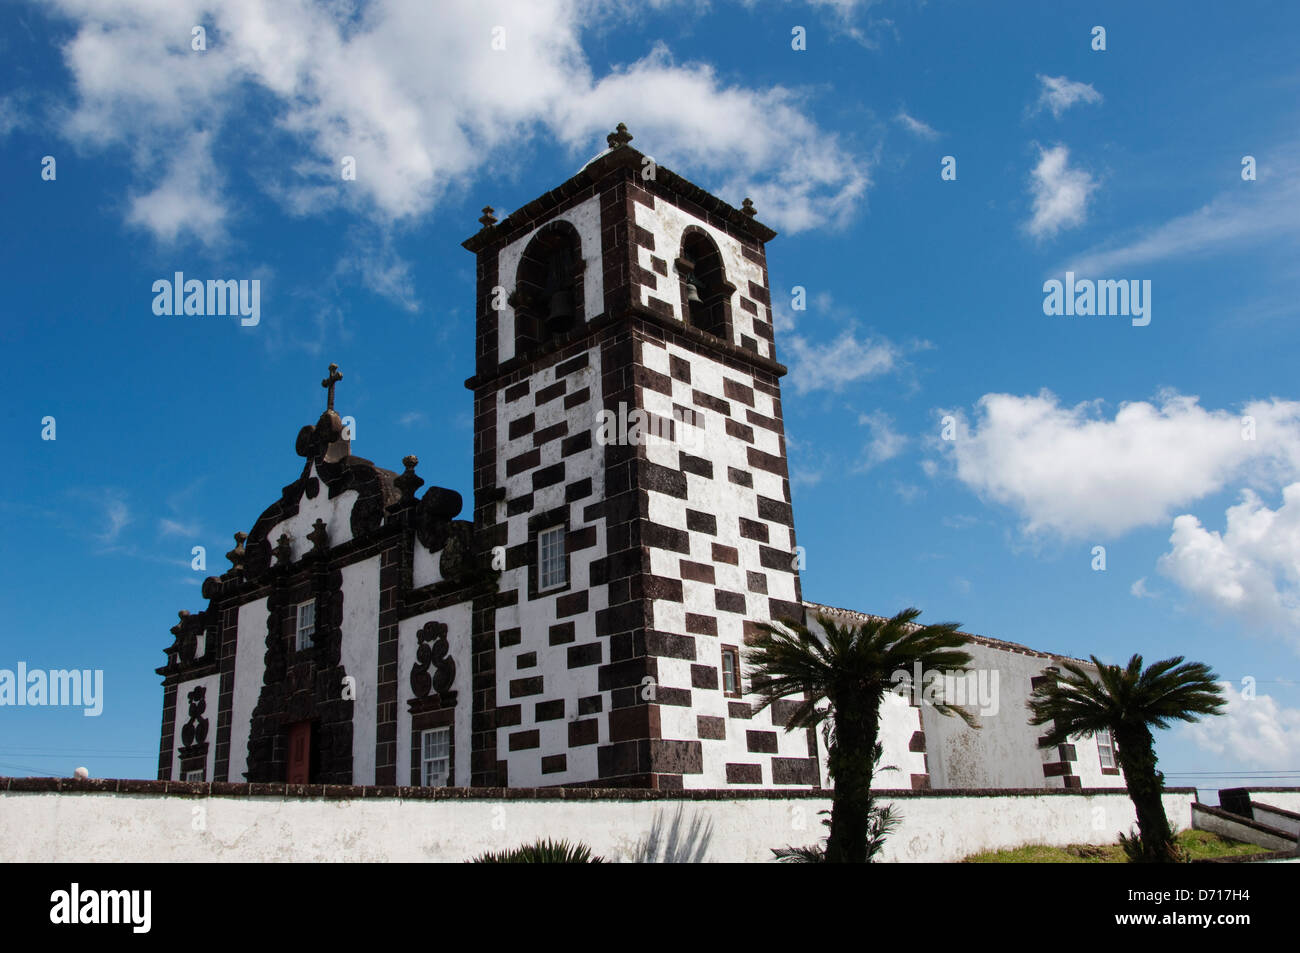 Le Portugal, Açores, l'île de Santa Maria, Espirito Santo, Église Banque D'Images